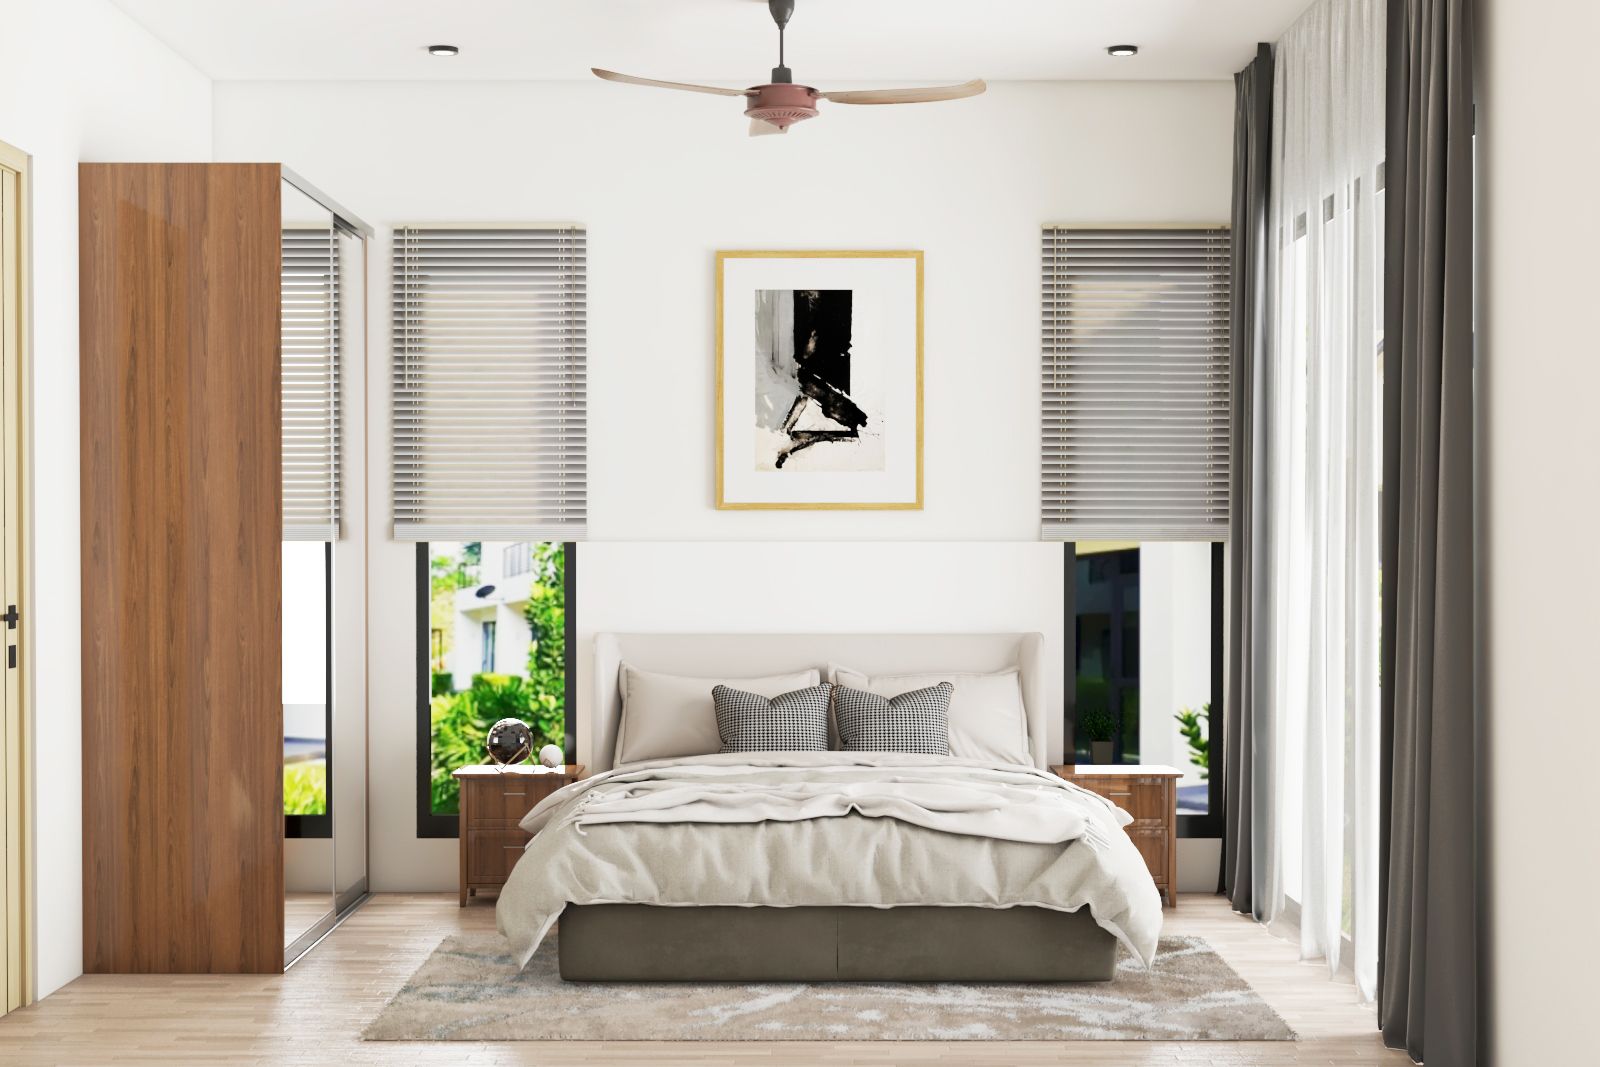 Spacious Master Bedroom Design With Contemporary Decor